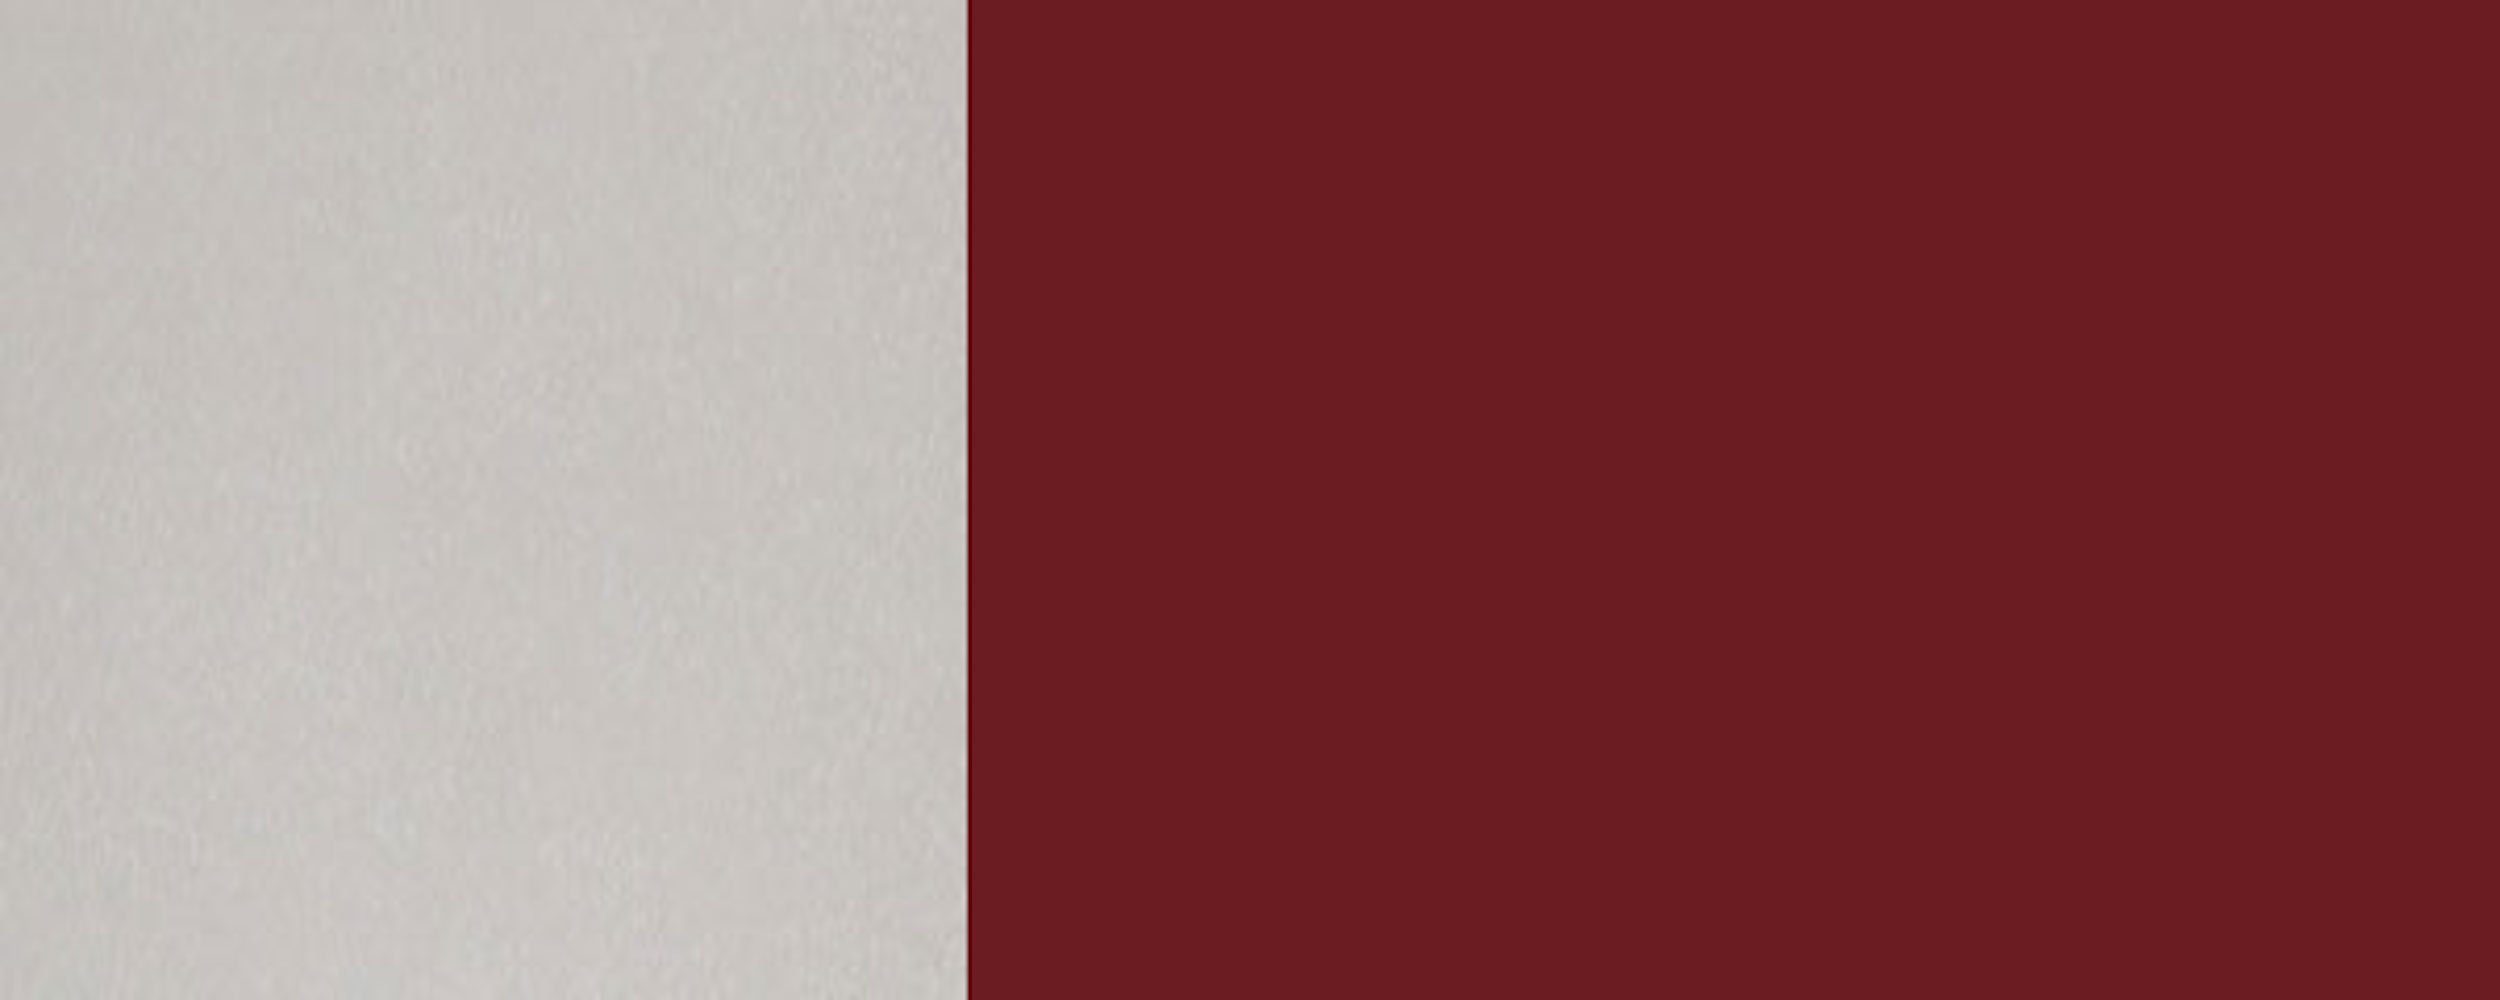 50cm 3004 purpurrot (Rimini) RAL Rimini Feldmann-Wohnen Front- 1-türig und Klapphängeschrank Korpusfarbe matt wählbar